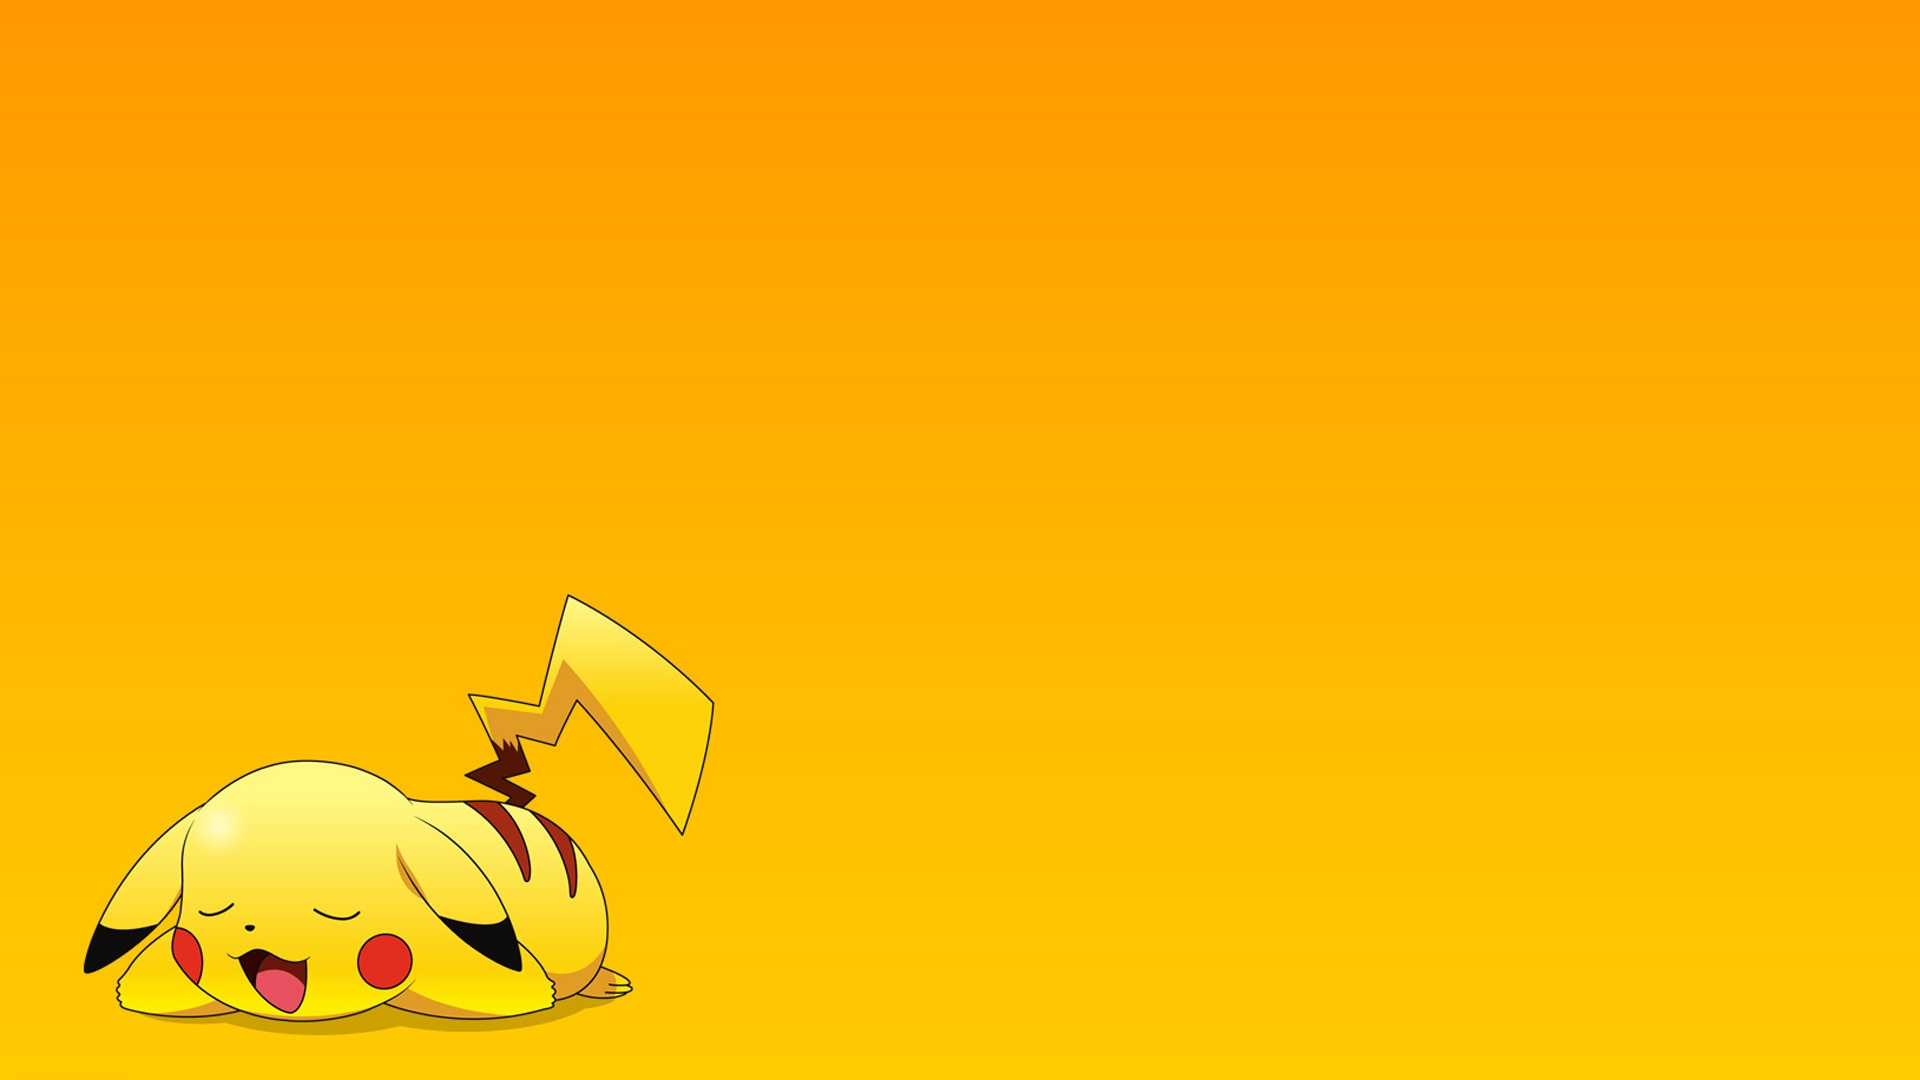 Pikachu Wallpaper HD Full Size Desktopas